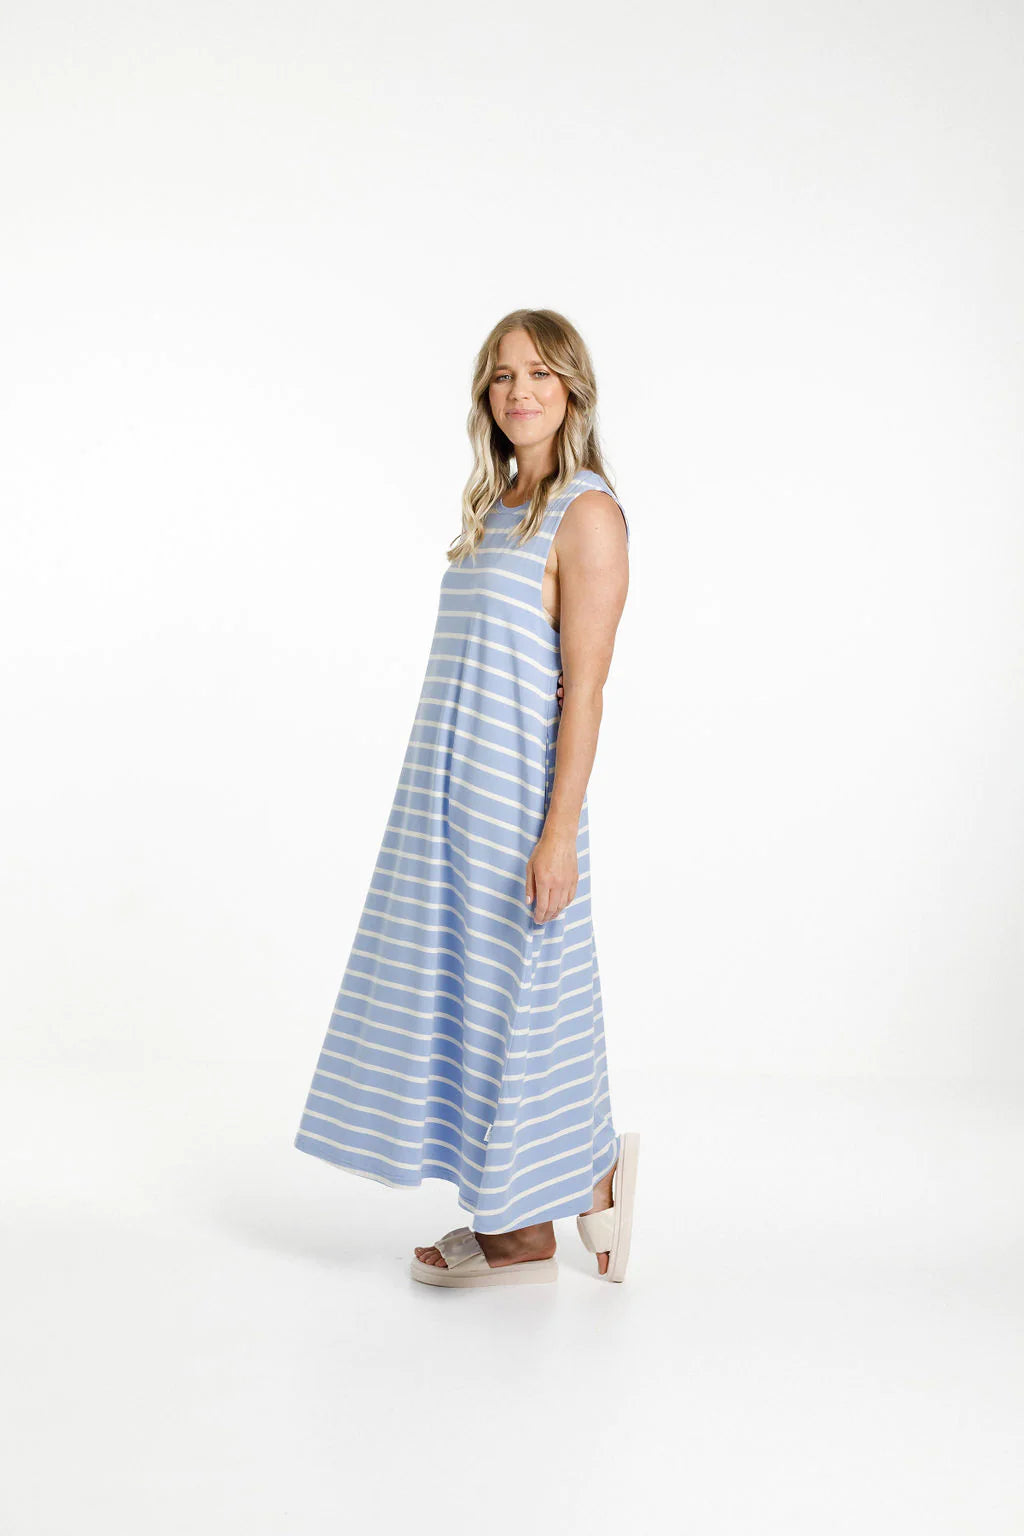 Home lee - Bella Dress - Cerulean Stripes - Blue/White - 50% Off